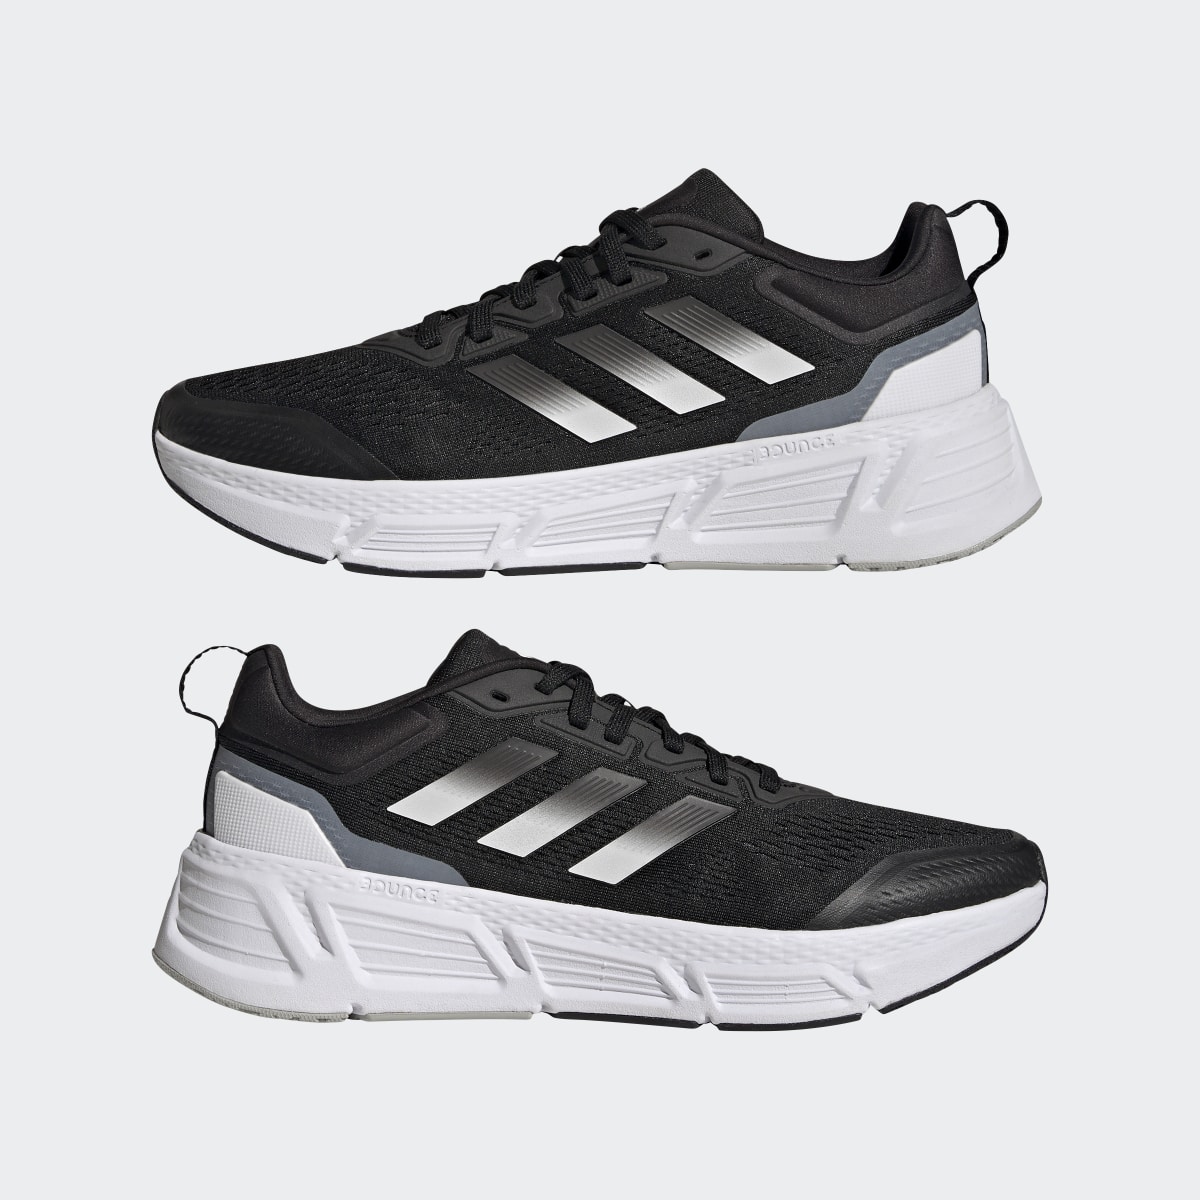 Adidas Questar Shoes. 8